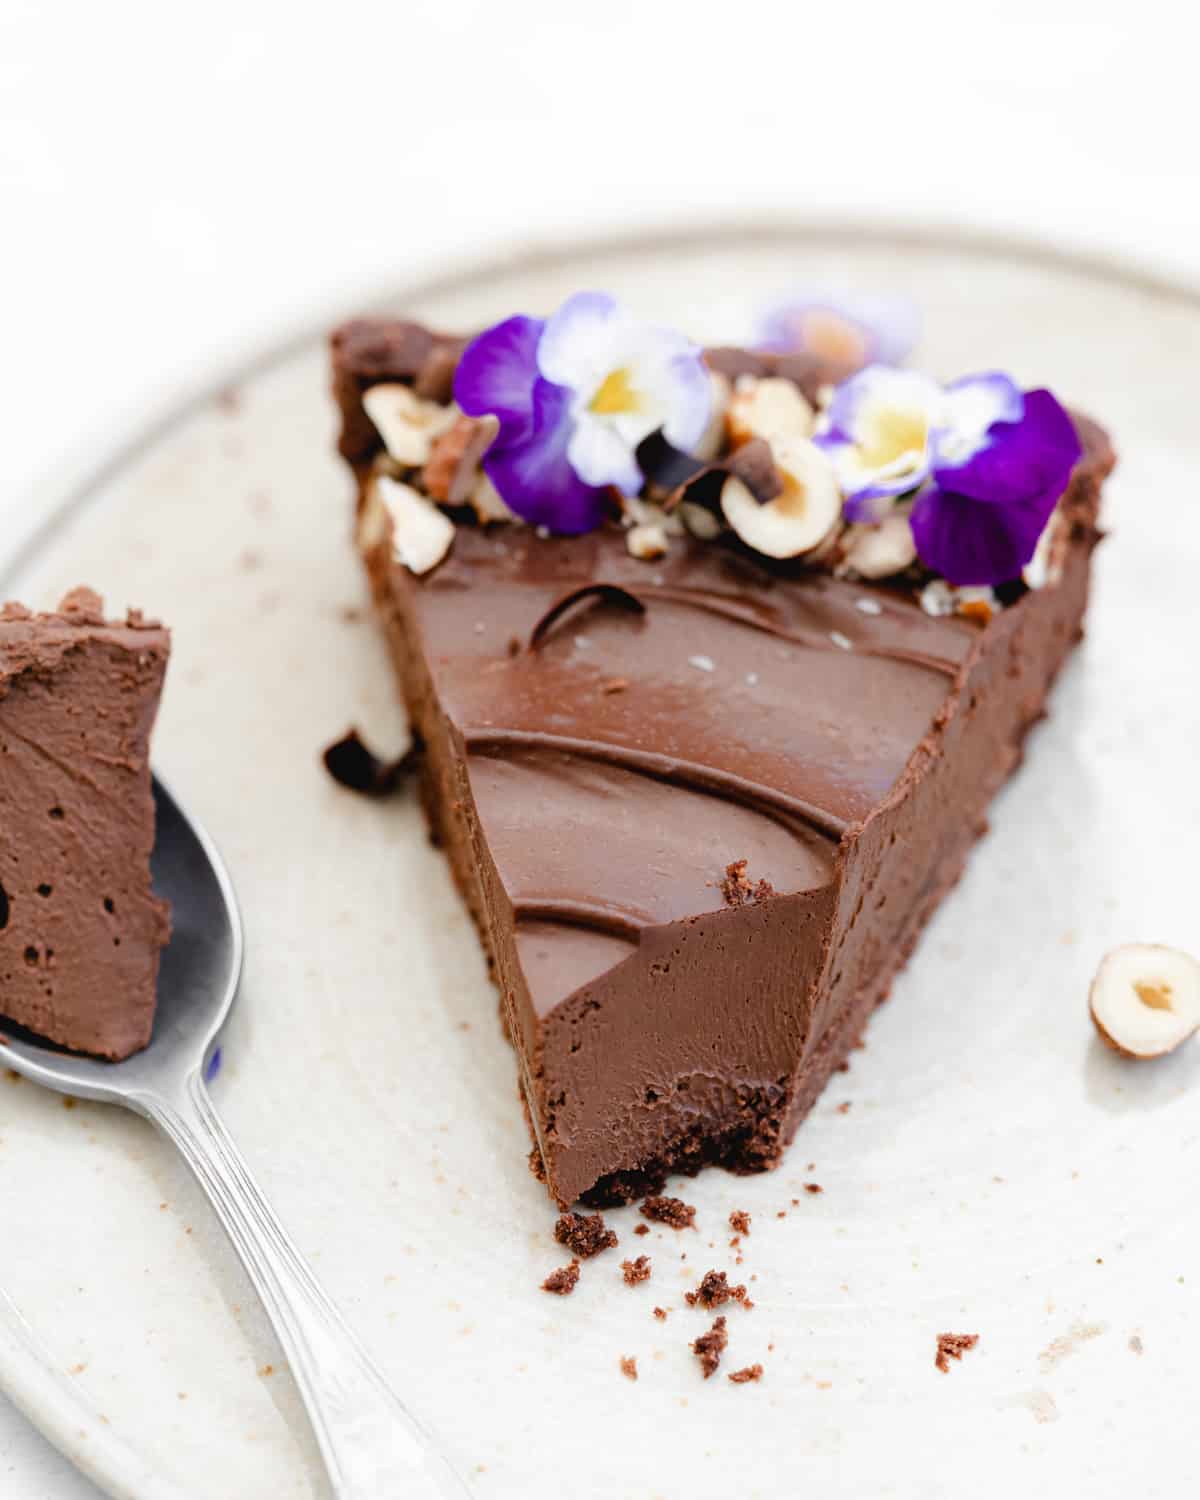 slice of chocolate hazelnut tart with edible purple flowers.